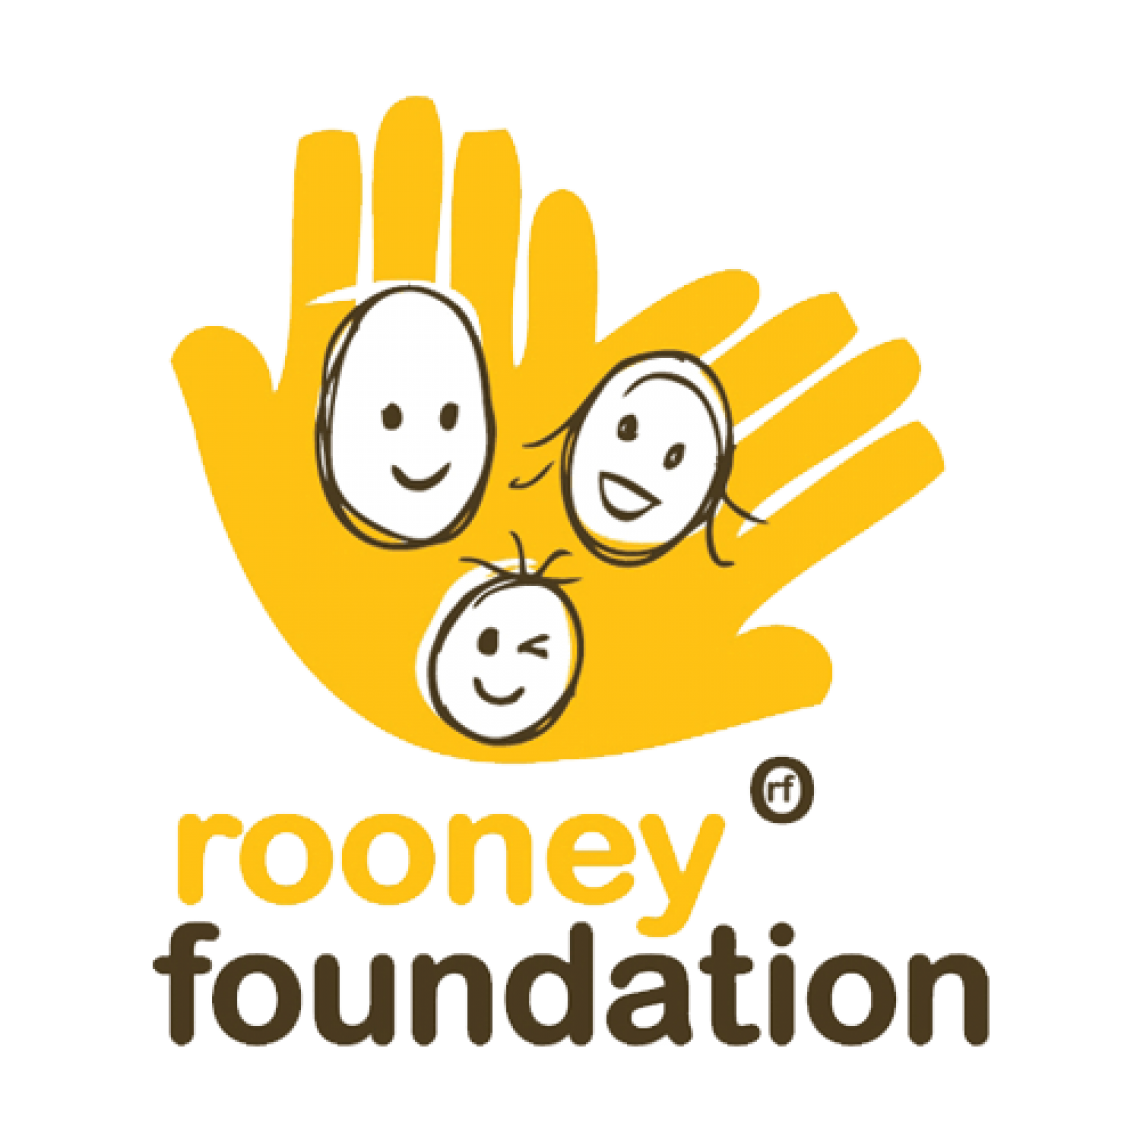 Rooney Foundation logo